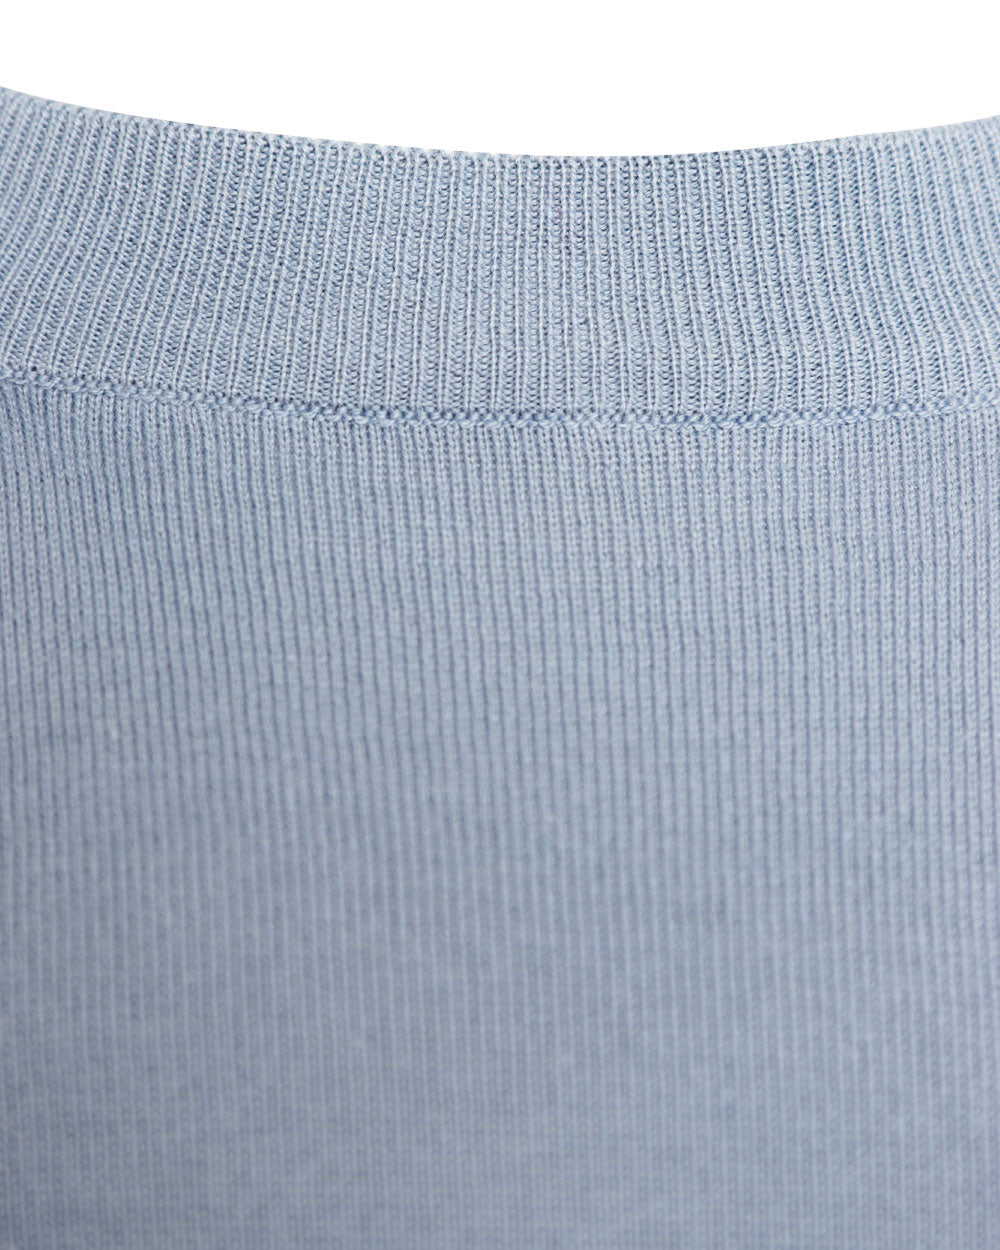 Light Blue Lightweight Cotton Crewneck Sweater